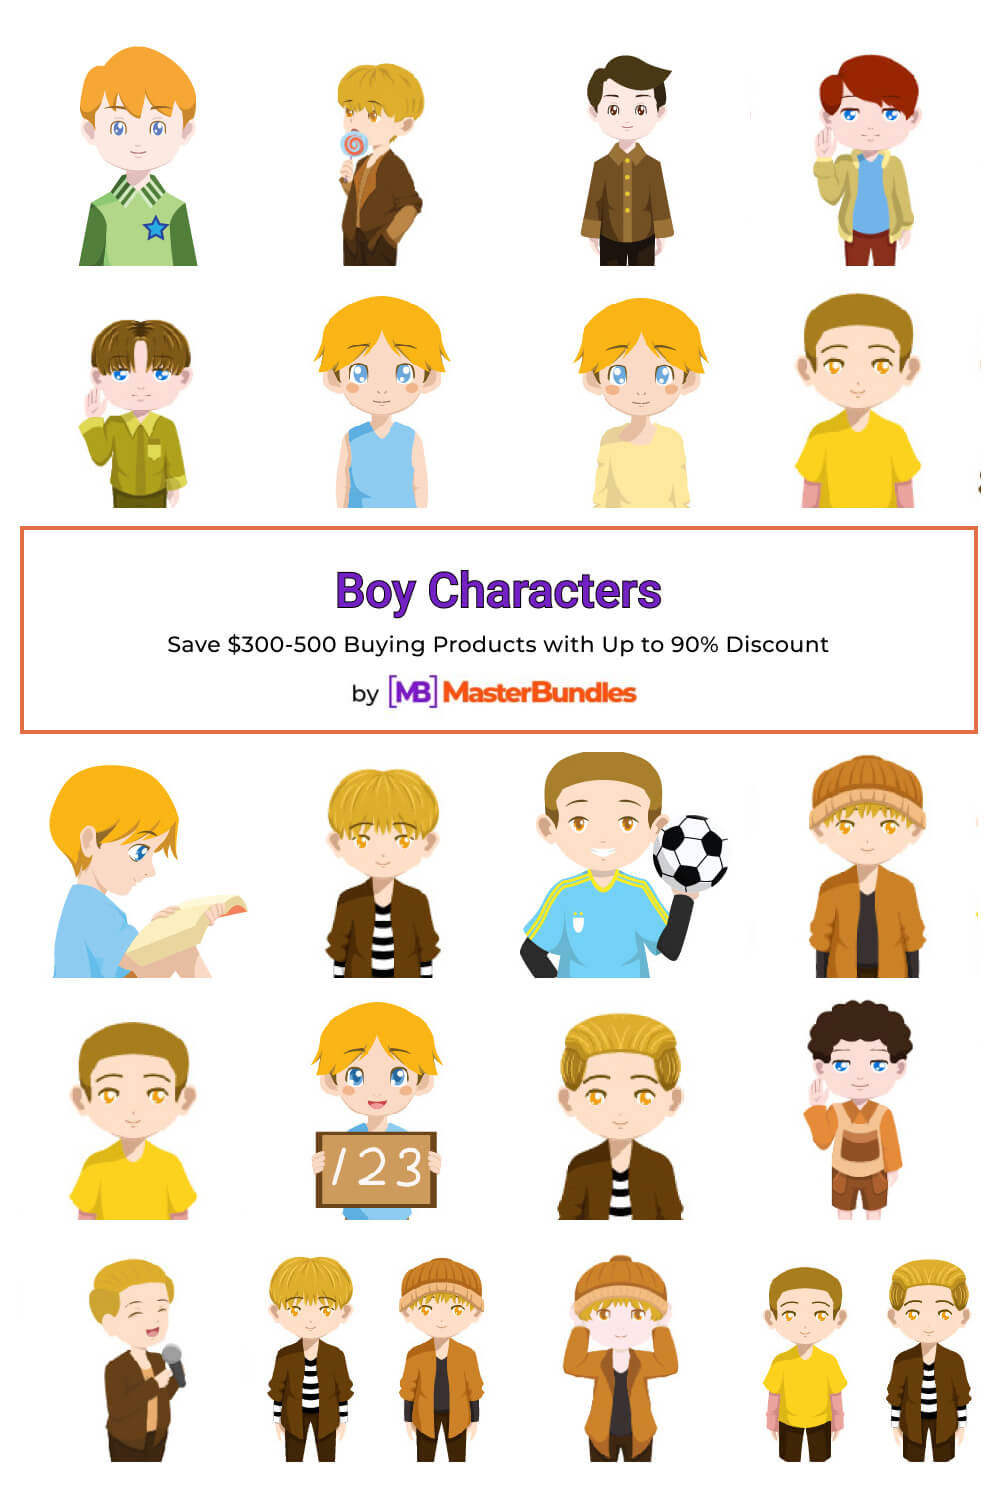 boy characters pinterest image.